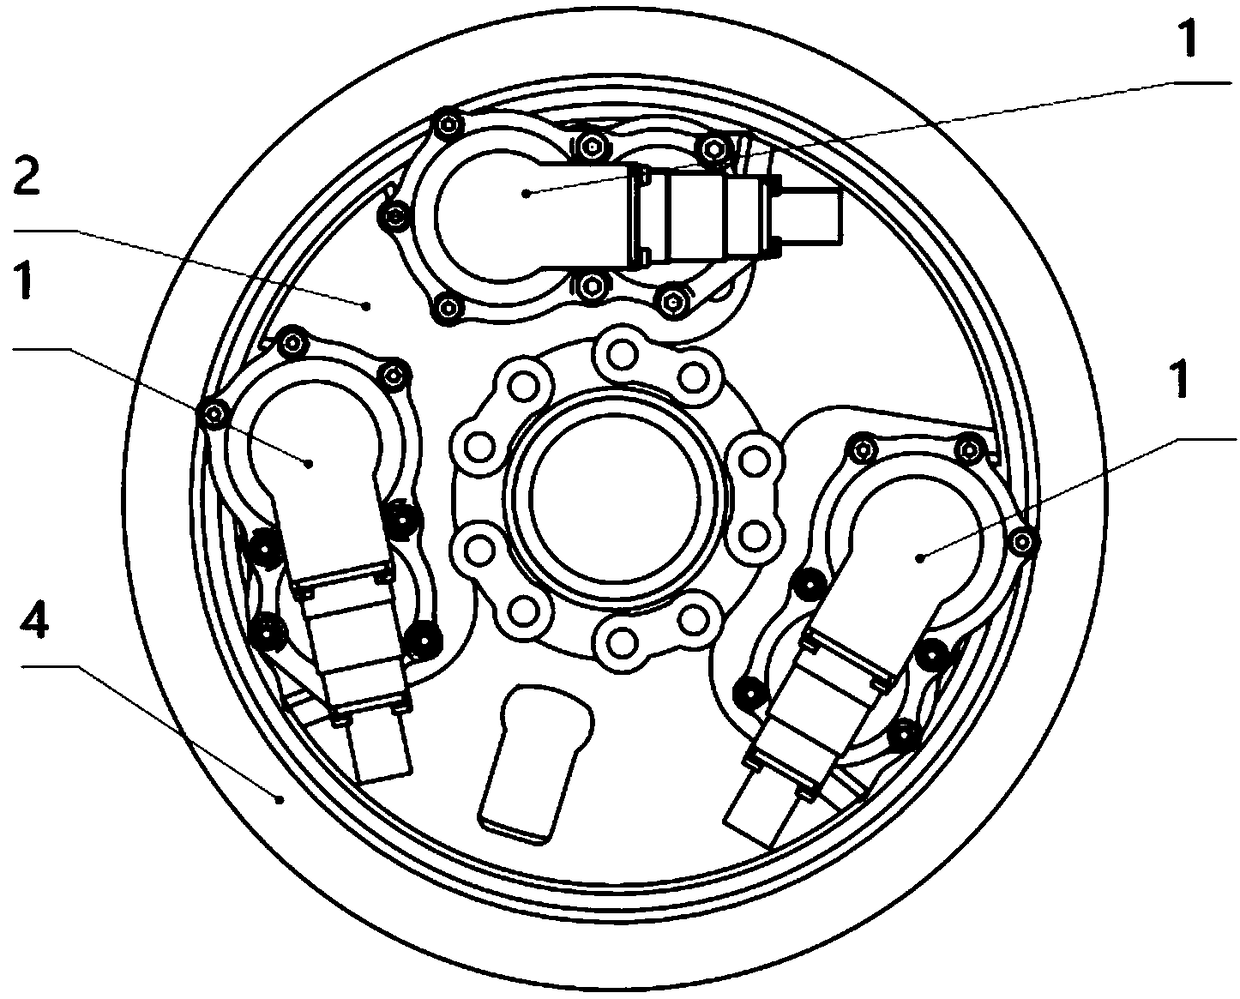 Triplex redundancy whole electric braking actuation system